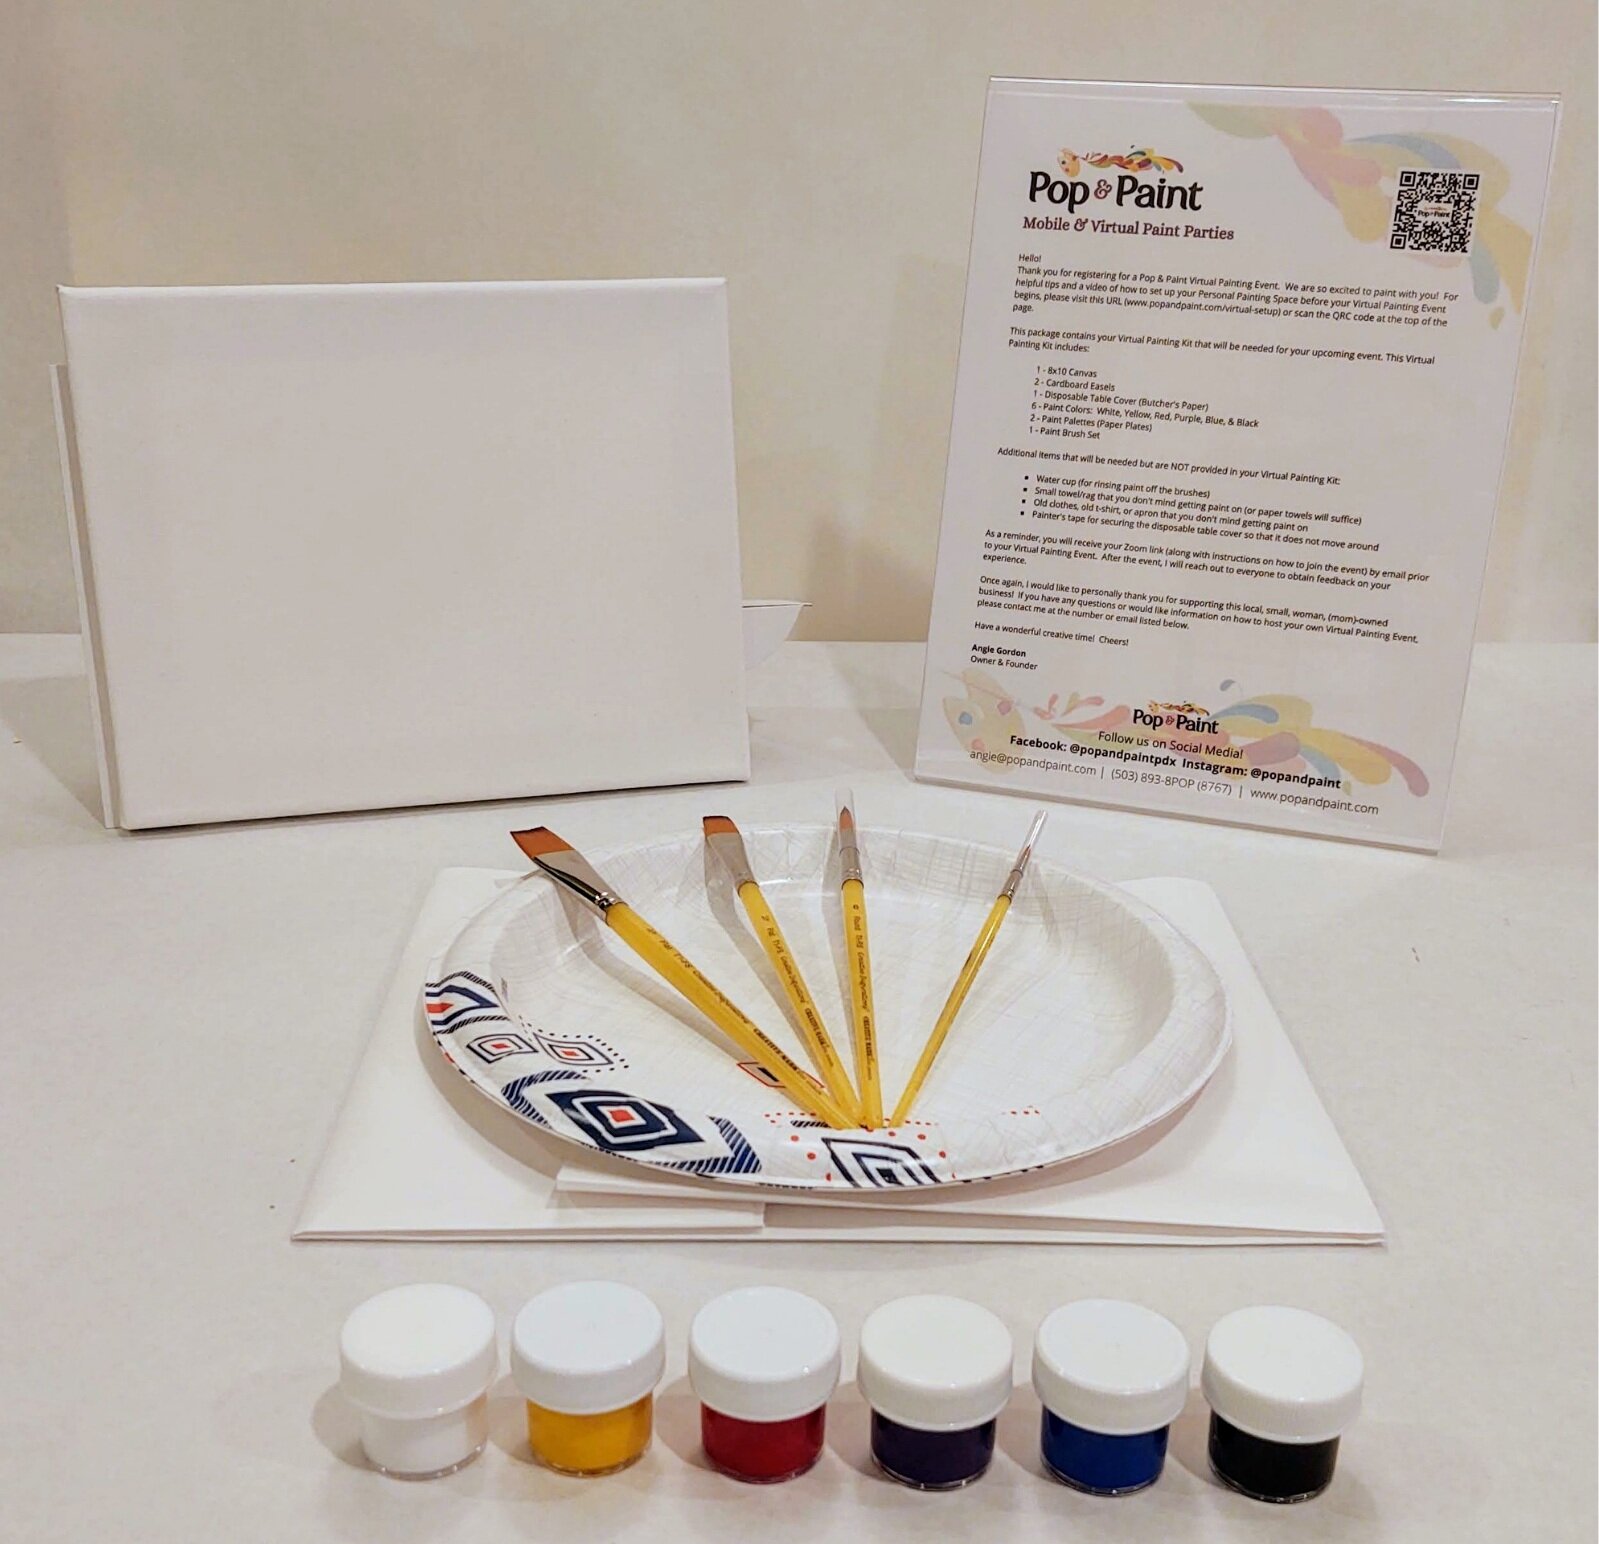 Virtual Painting Kit for Virtual Painting Classes or Video On-Demand Painting Classes — Pop and Paint